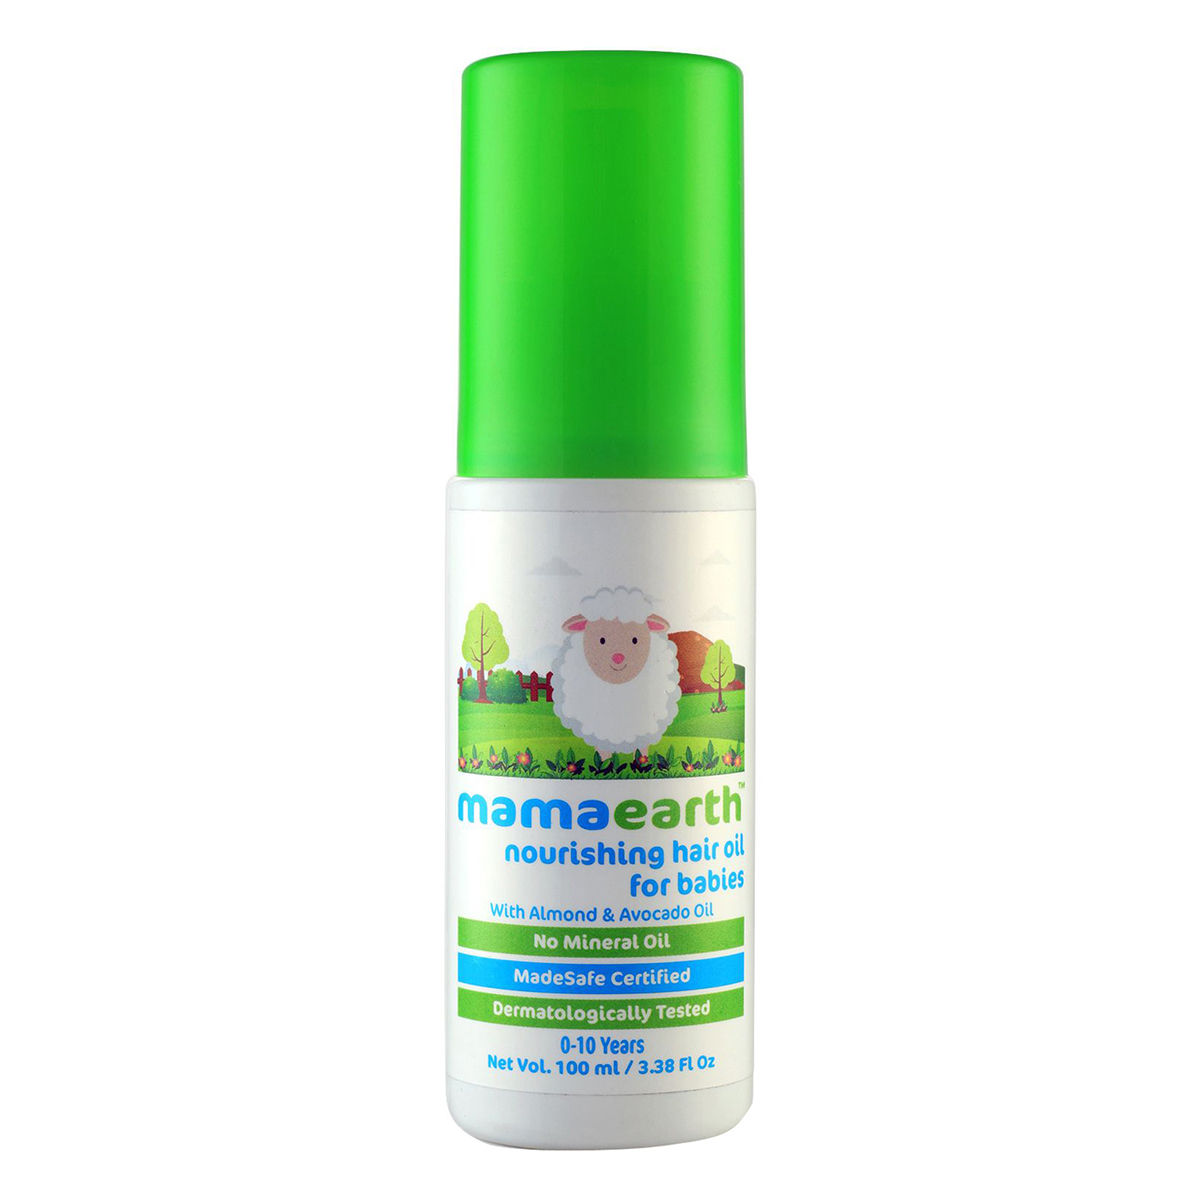 Buy Mamaearth Nourishing Hair Oil For Babies, 0-10 Years, 100 ml Online